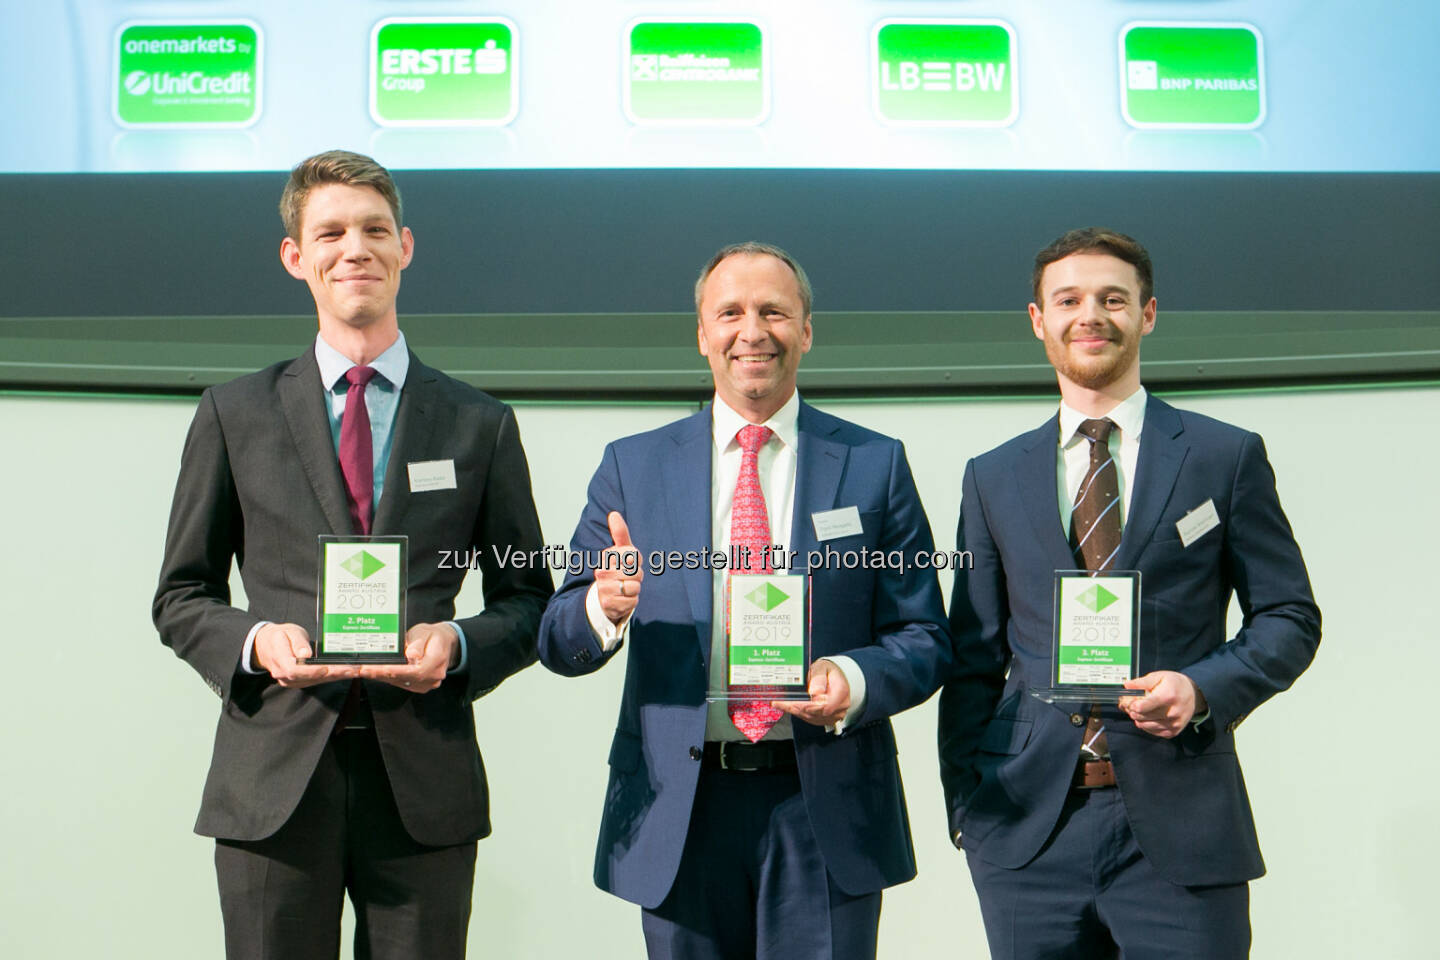 Zertifikate Award Austria 2019 - Express-Zertifikate